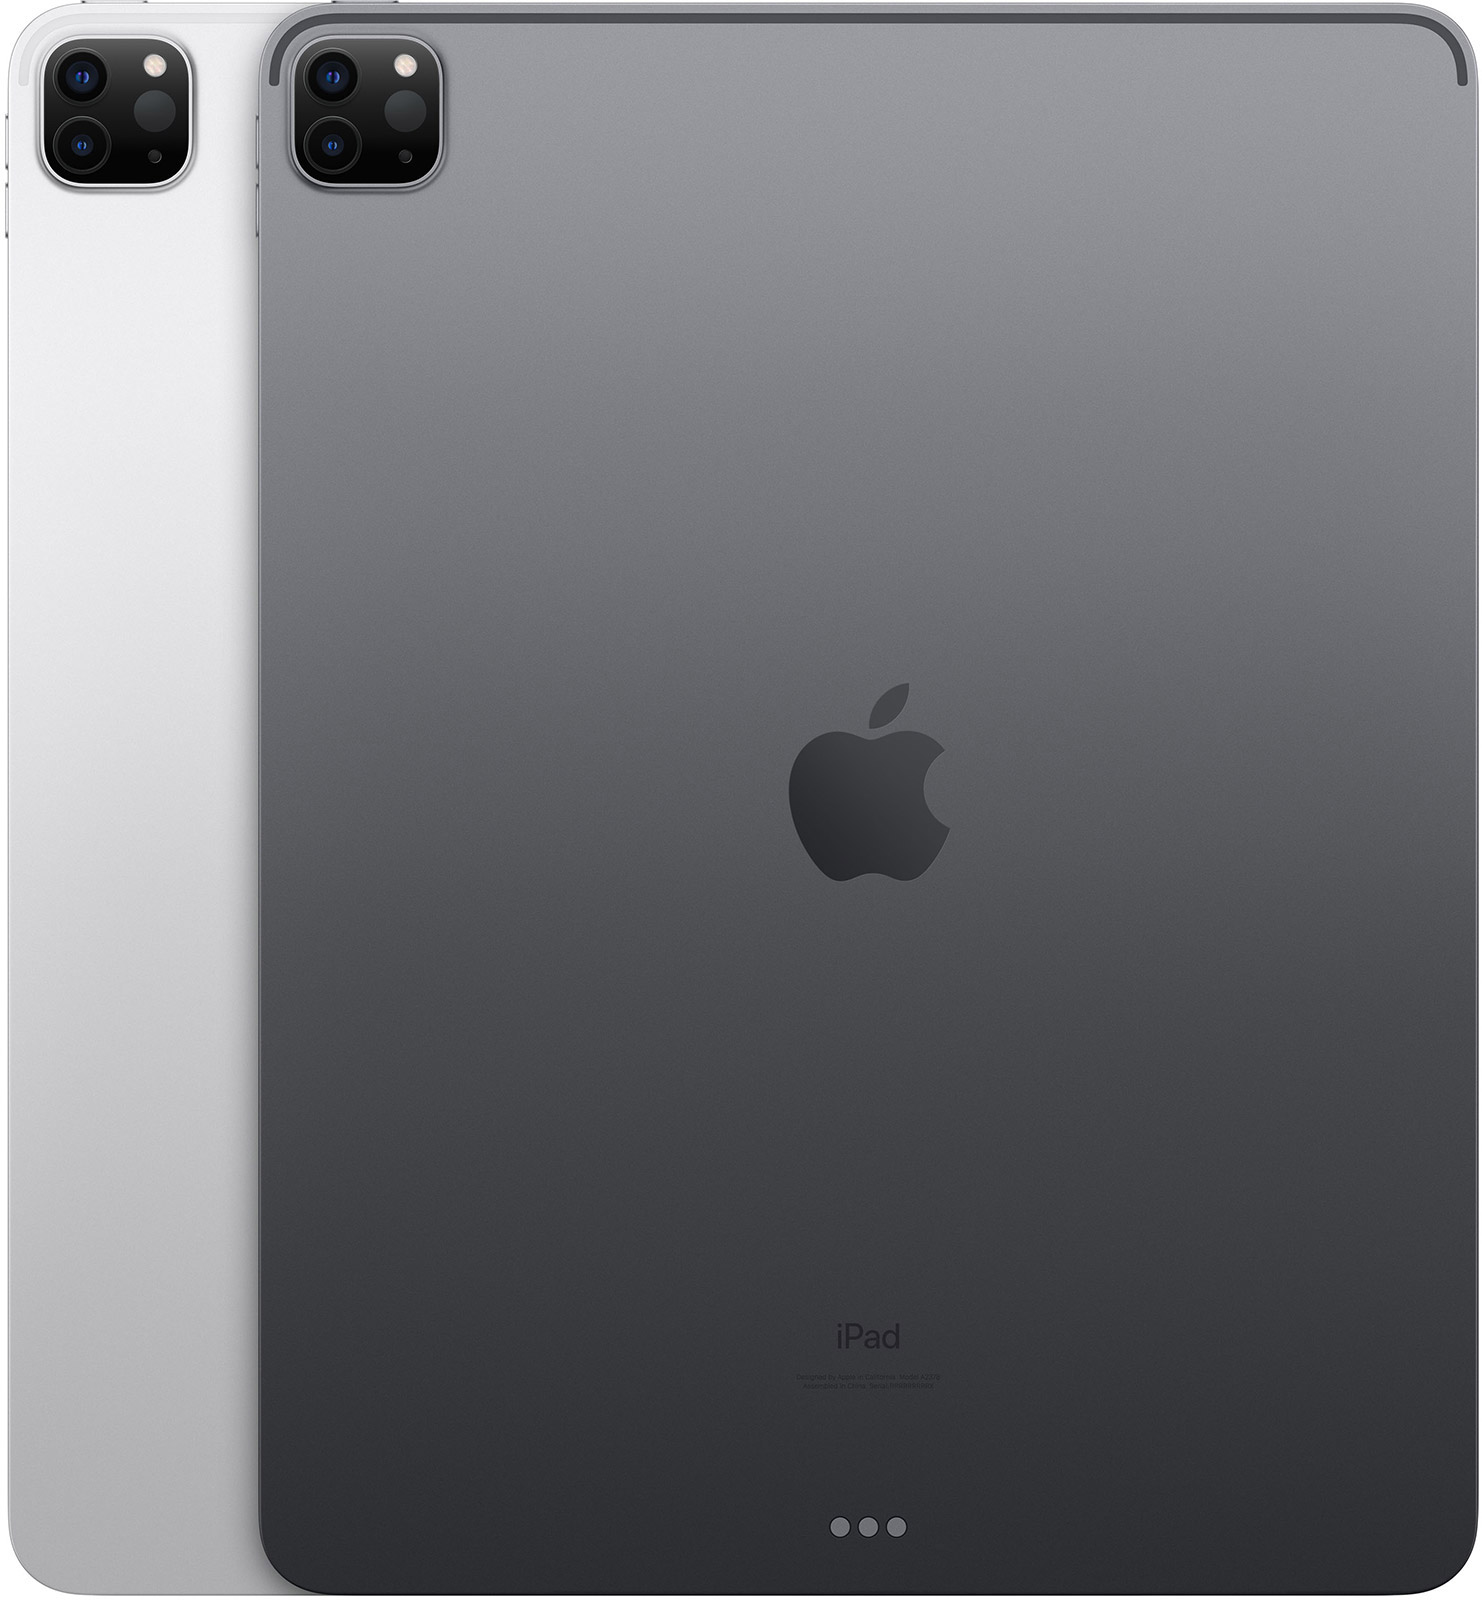 Apple-12-9-iPad-Pro-WiFi-1-TB-Space-Grau-2021-08.jpg